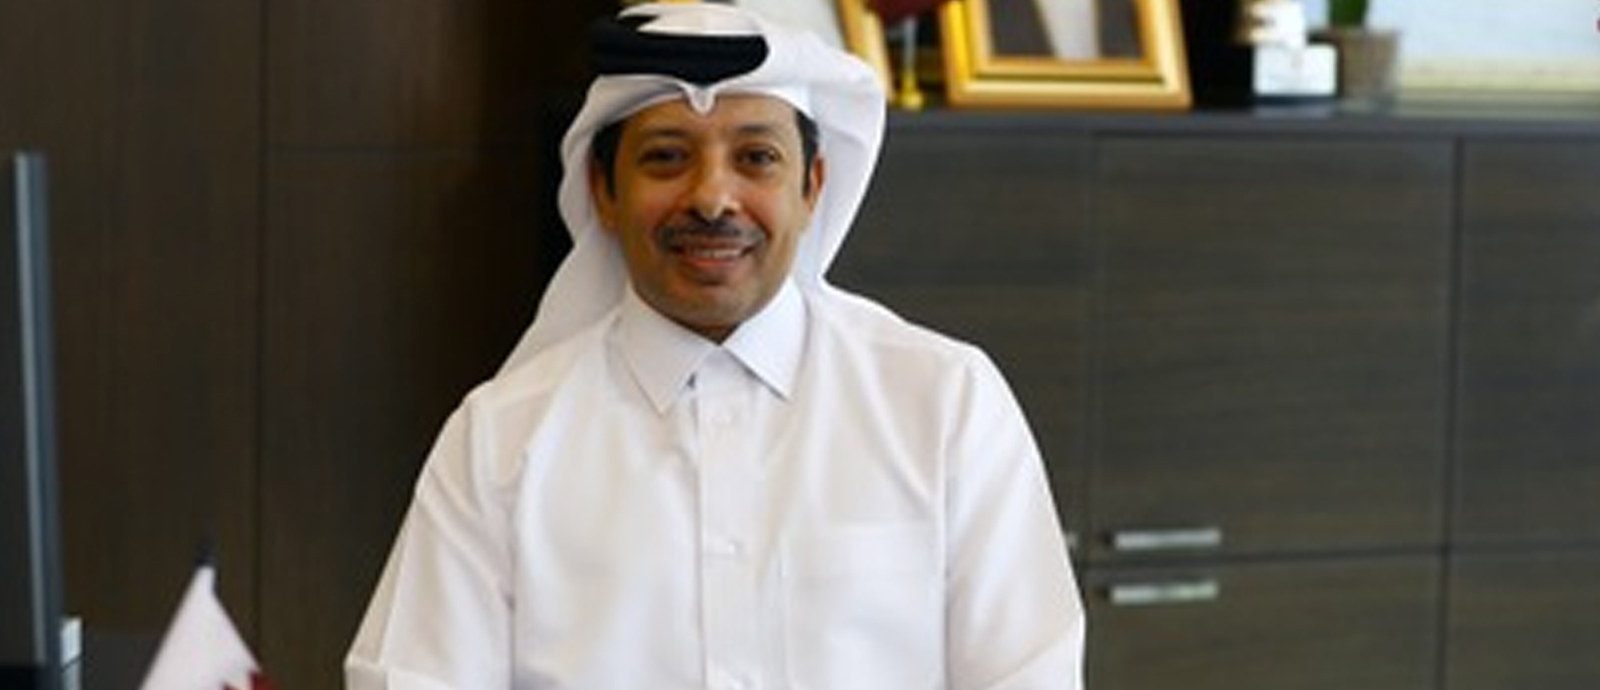 Mohammed Al Madhahka